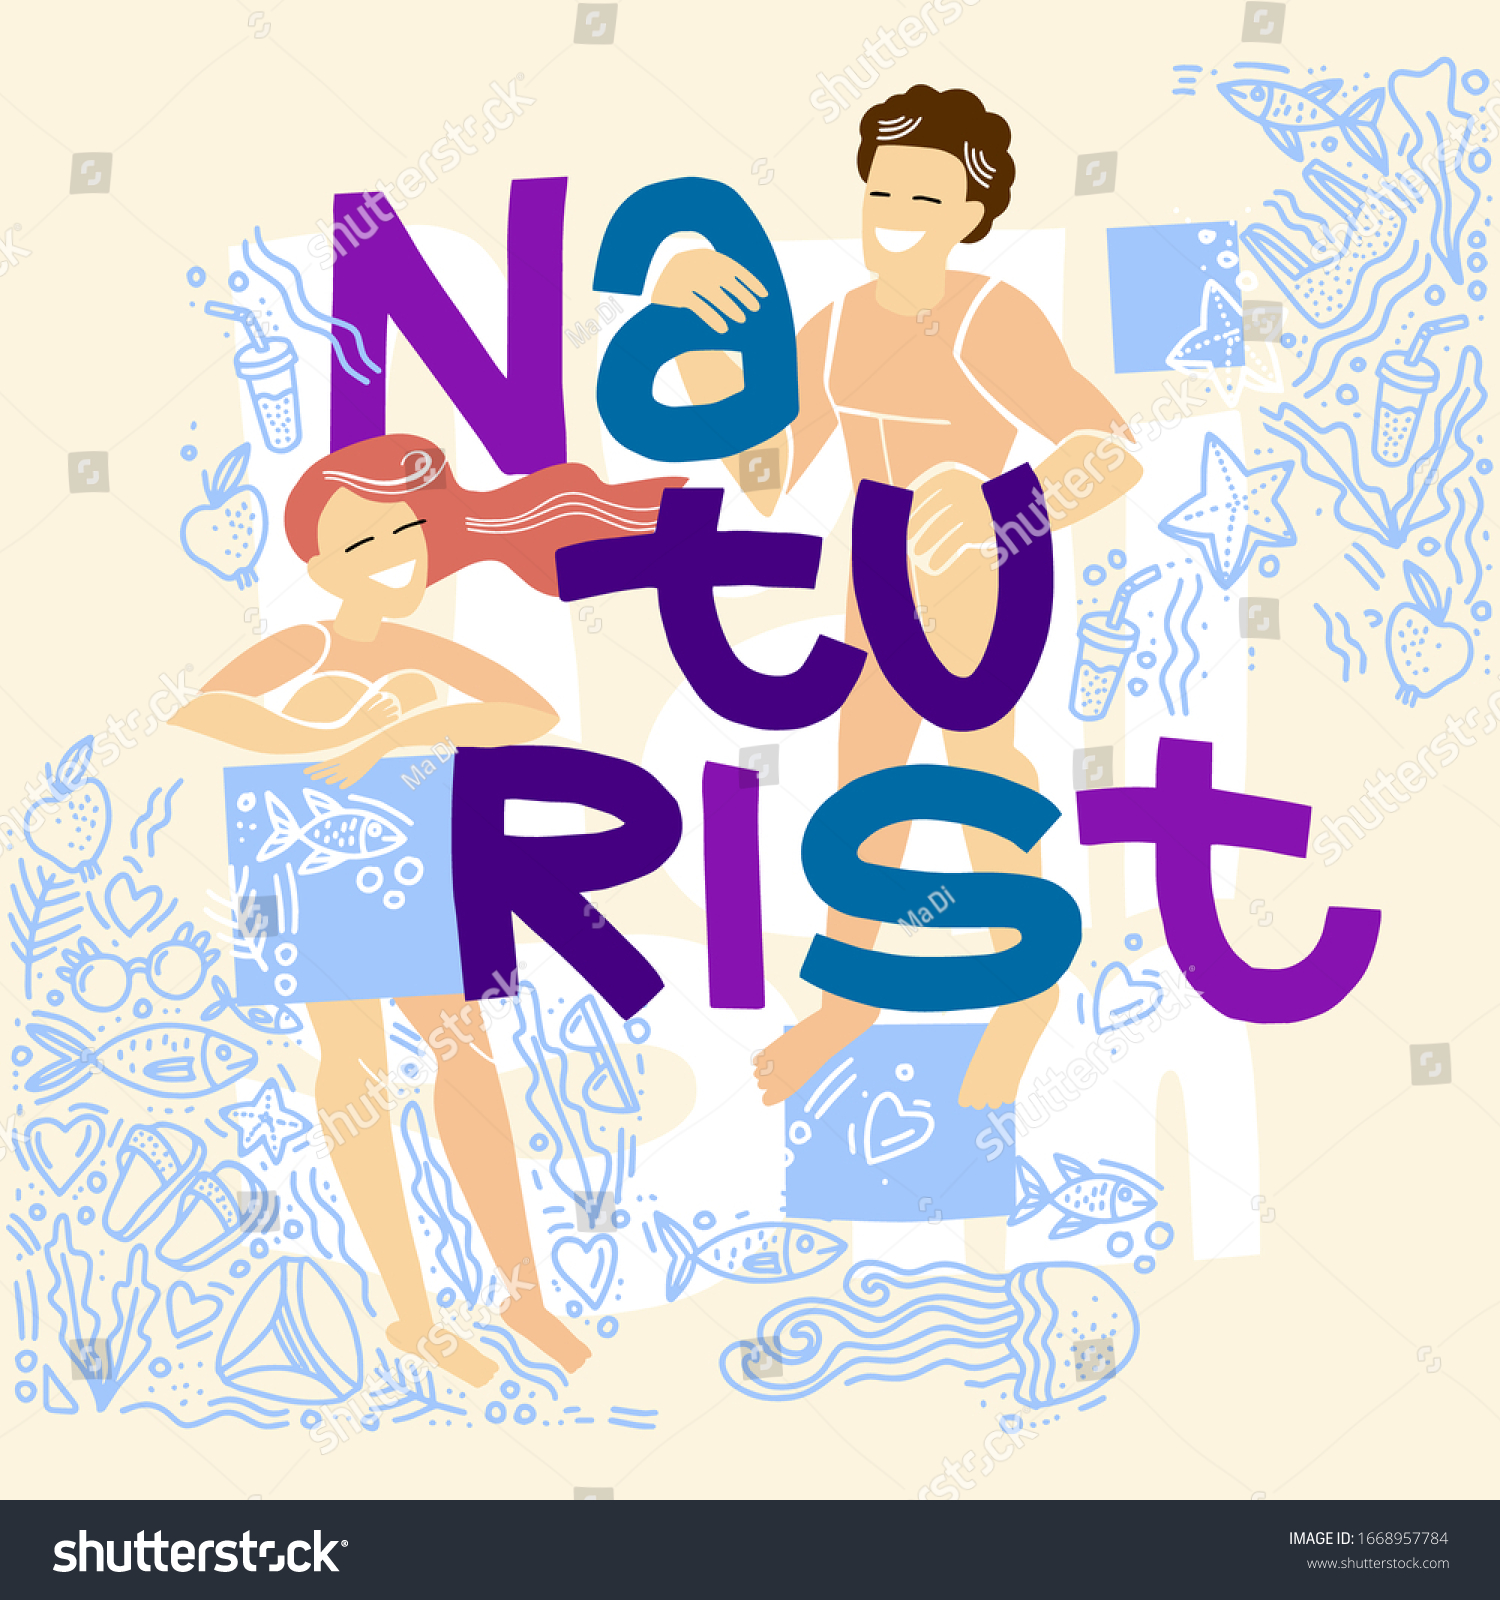 Nudity Nudism And Naturism